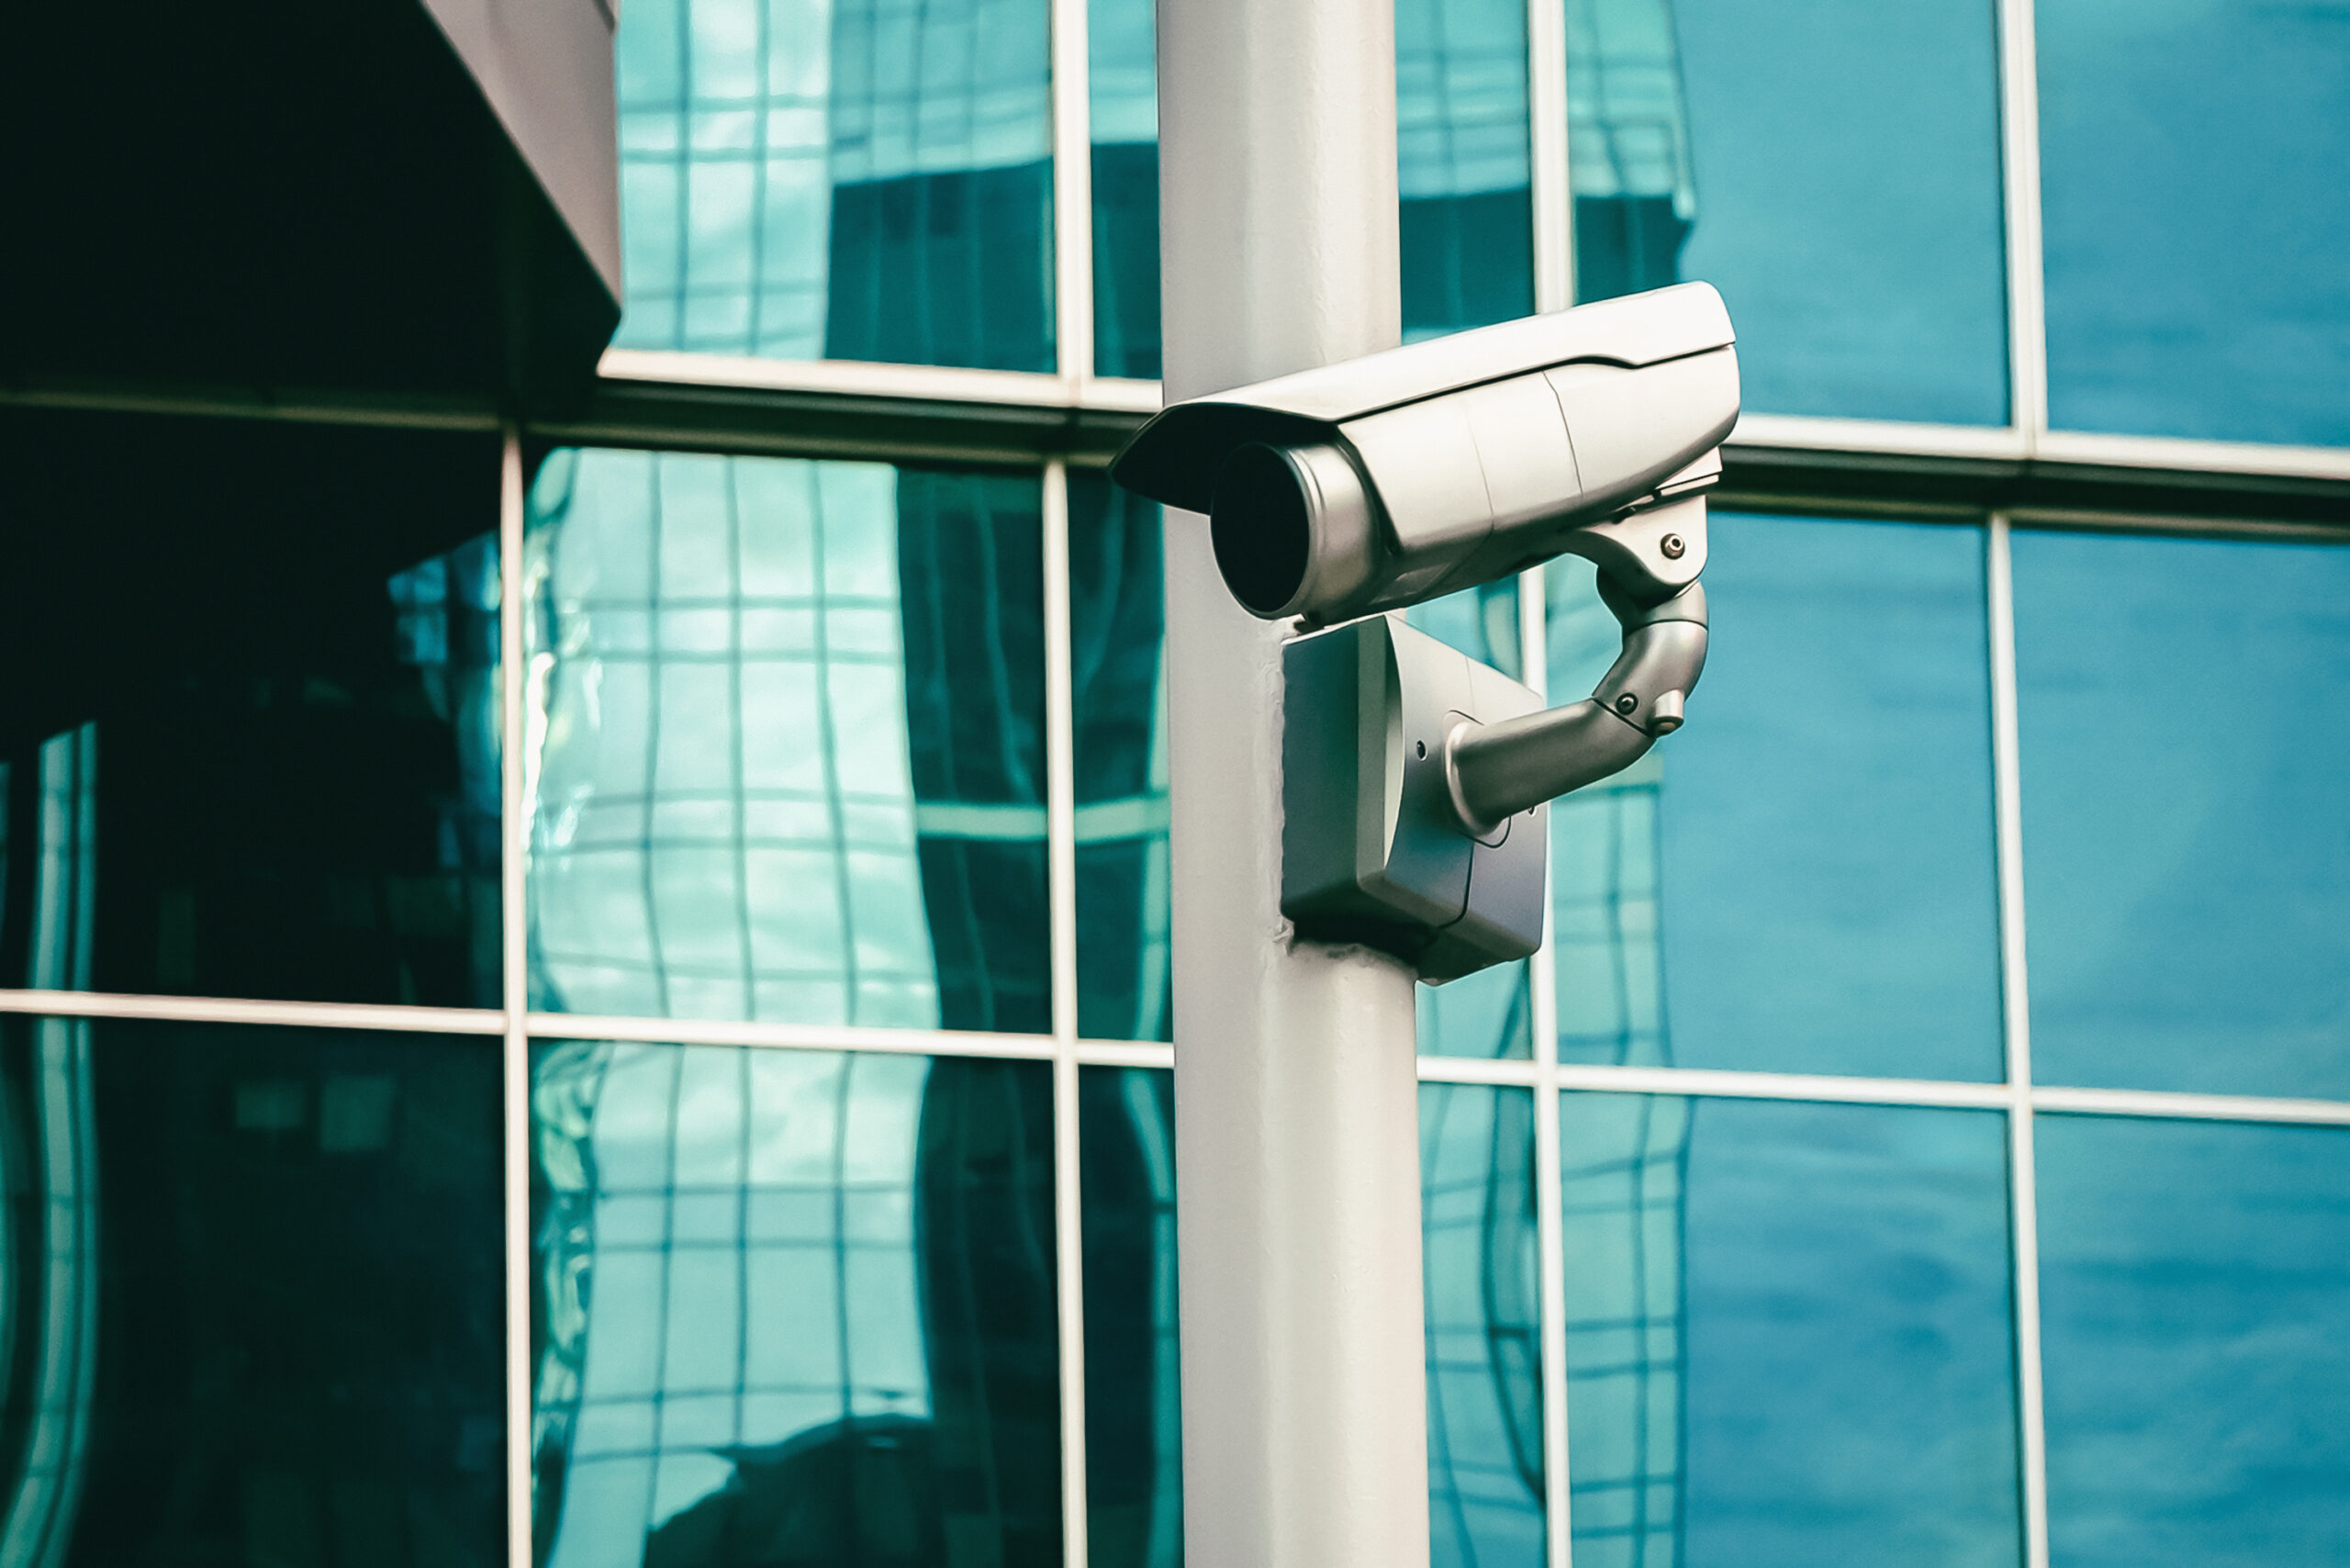 An outdoor security camera guarding a business